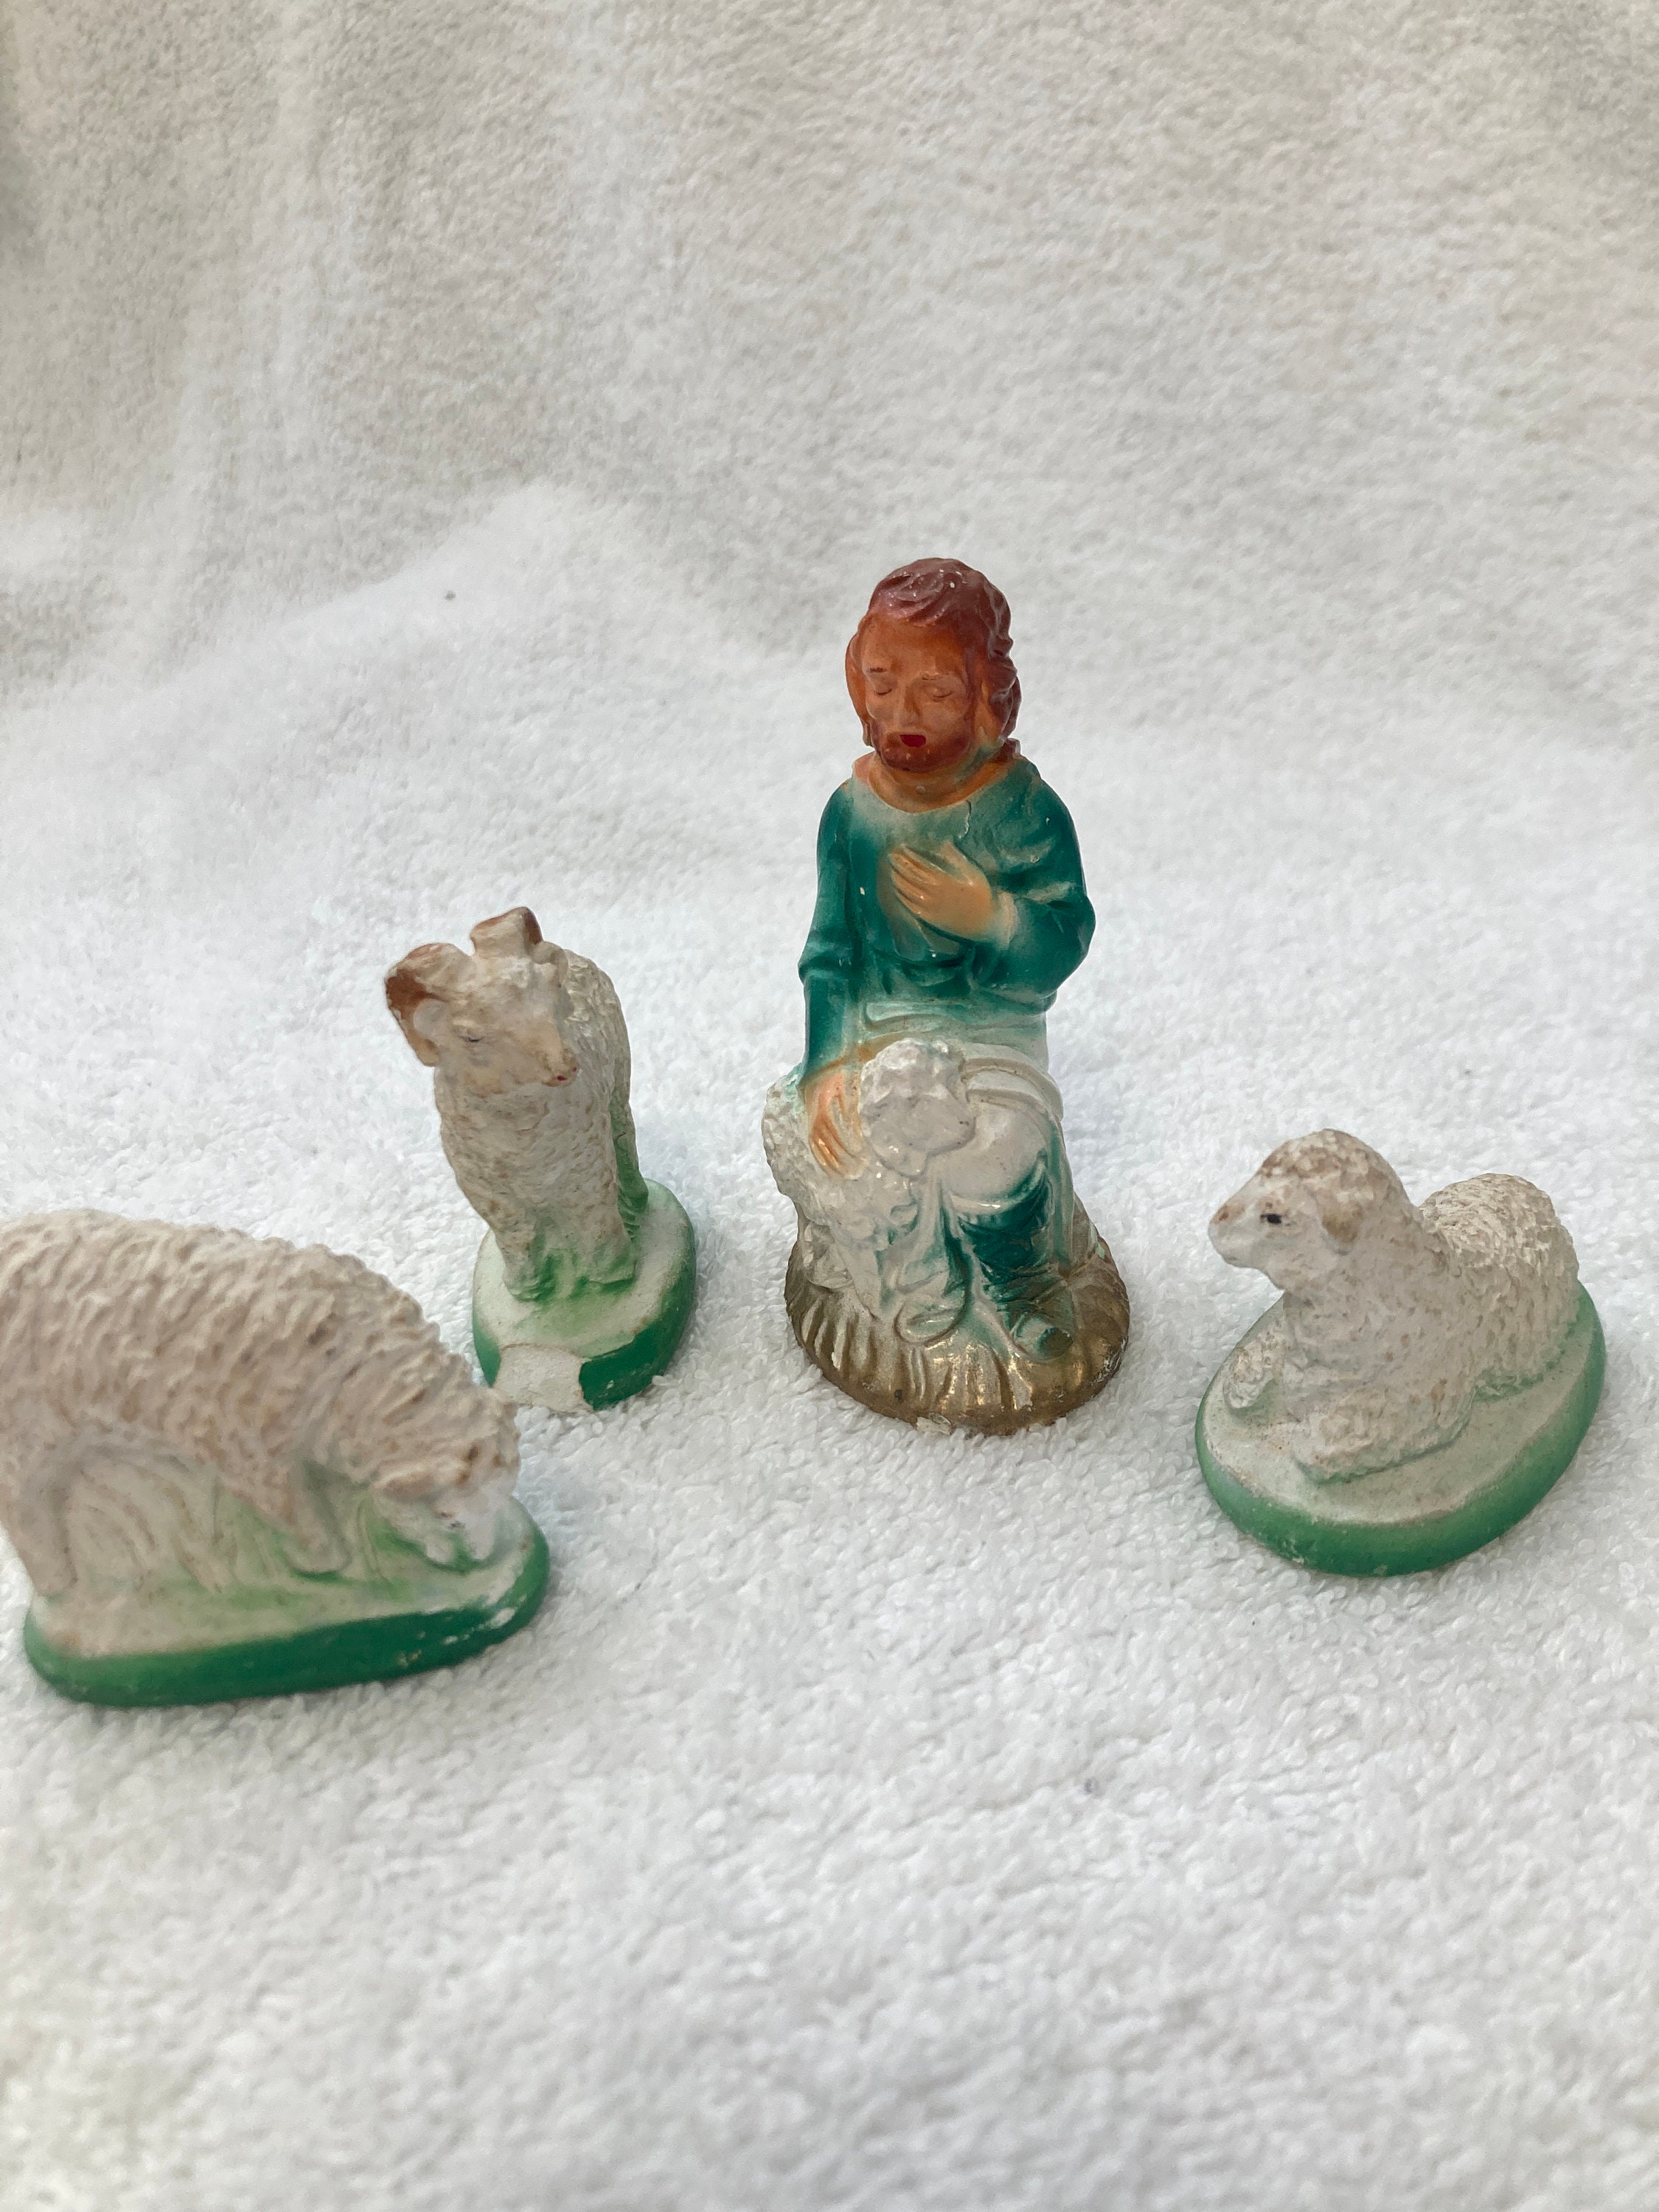 Nativity Plaster Shepherd Figurine, Kneeling With Lamb at His Side